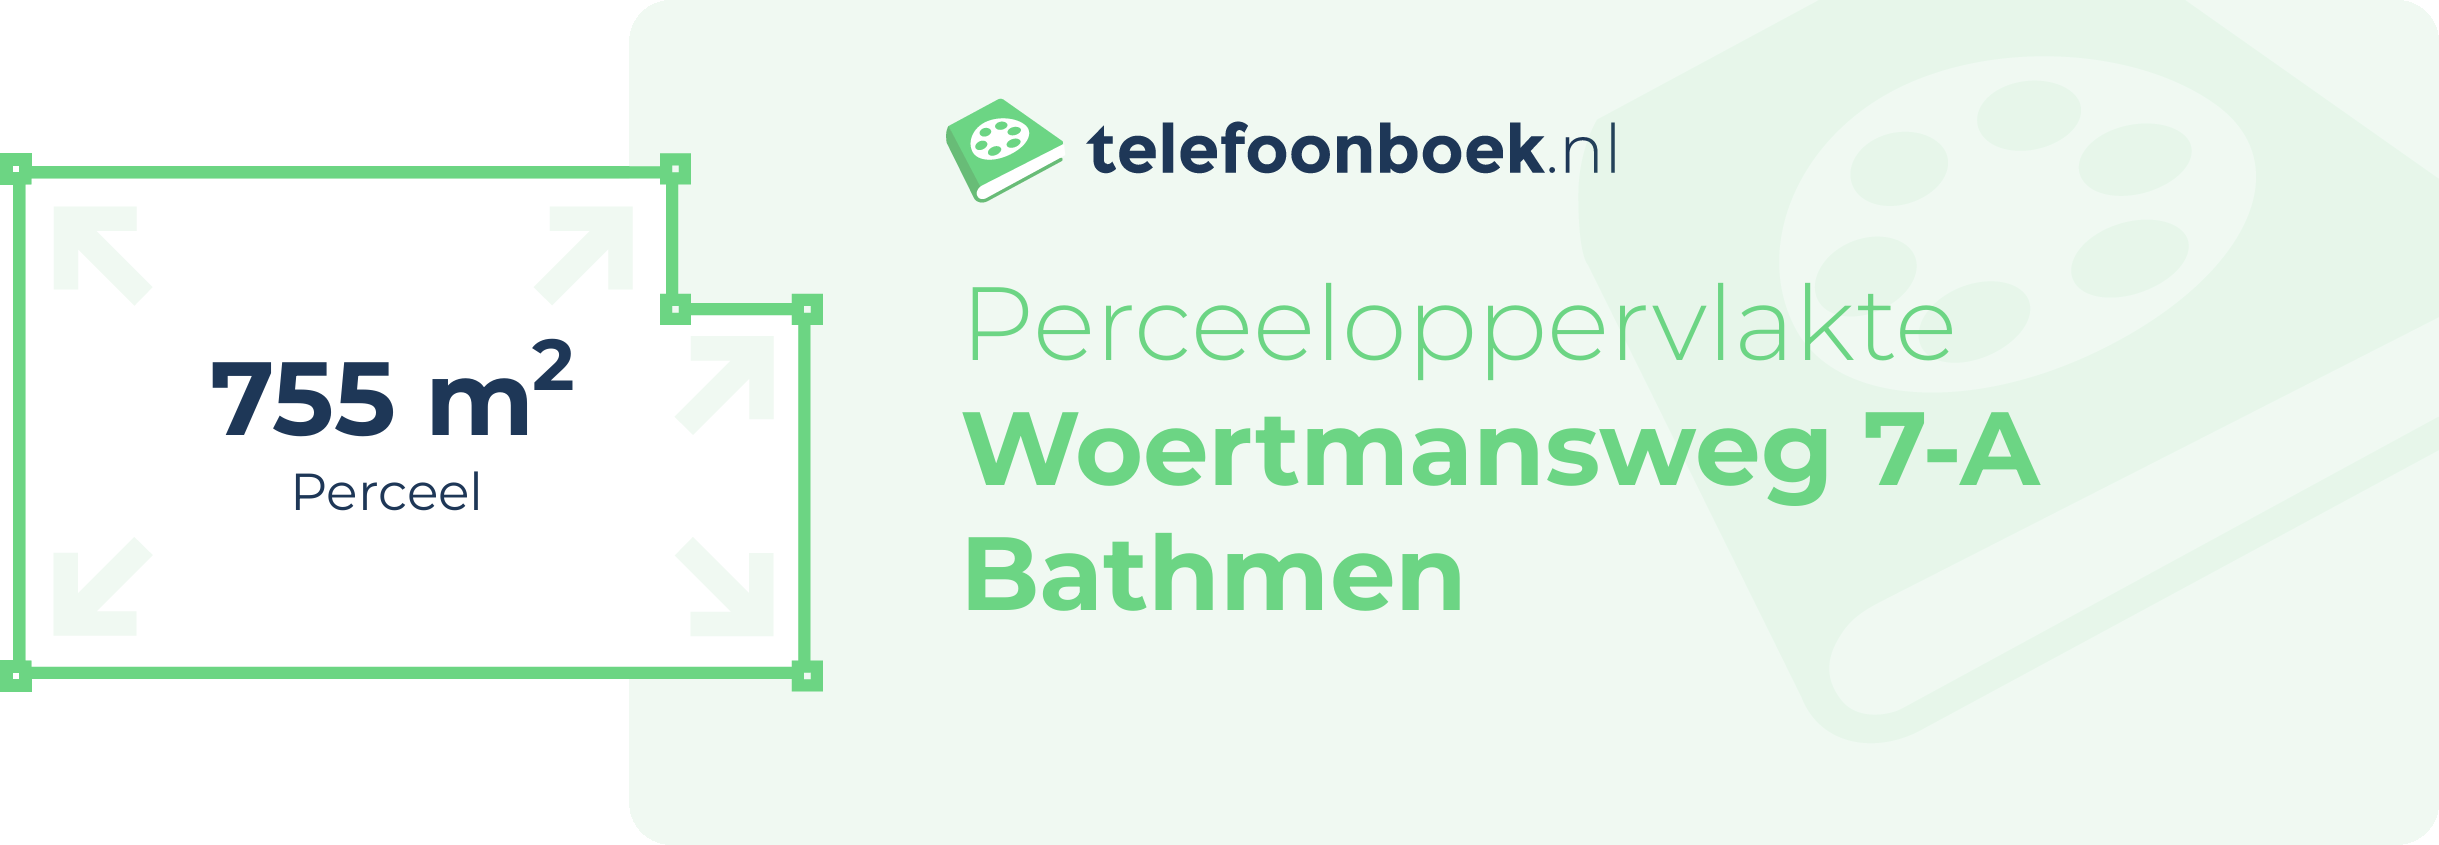 Perceeloppervlakte Woertmansweg 7-A Bathmen